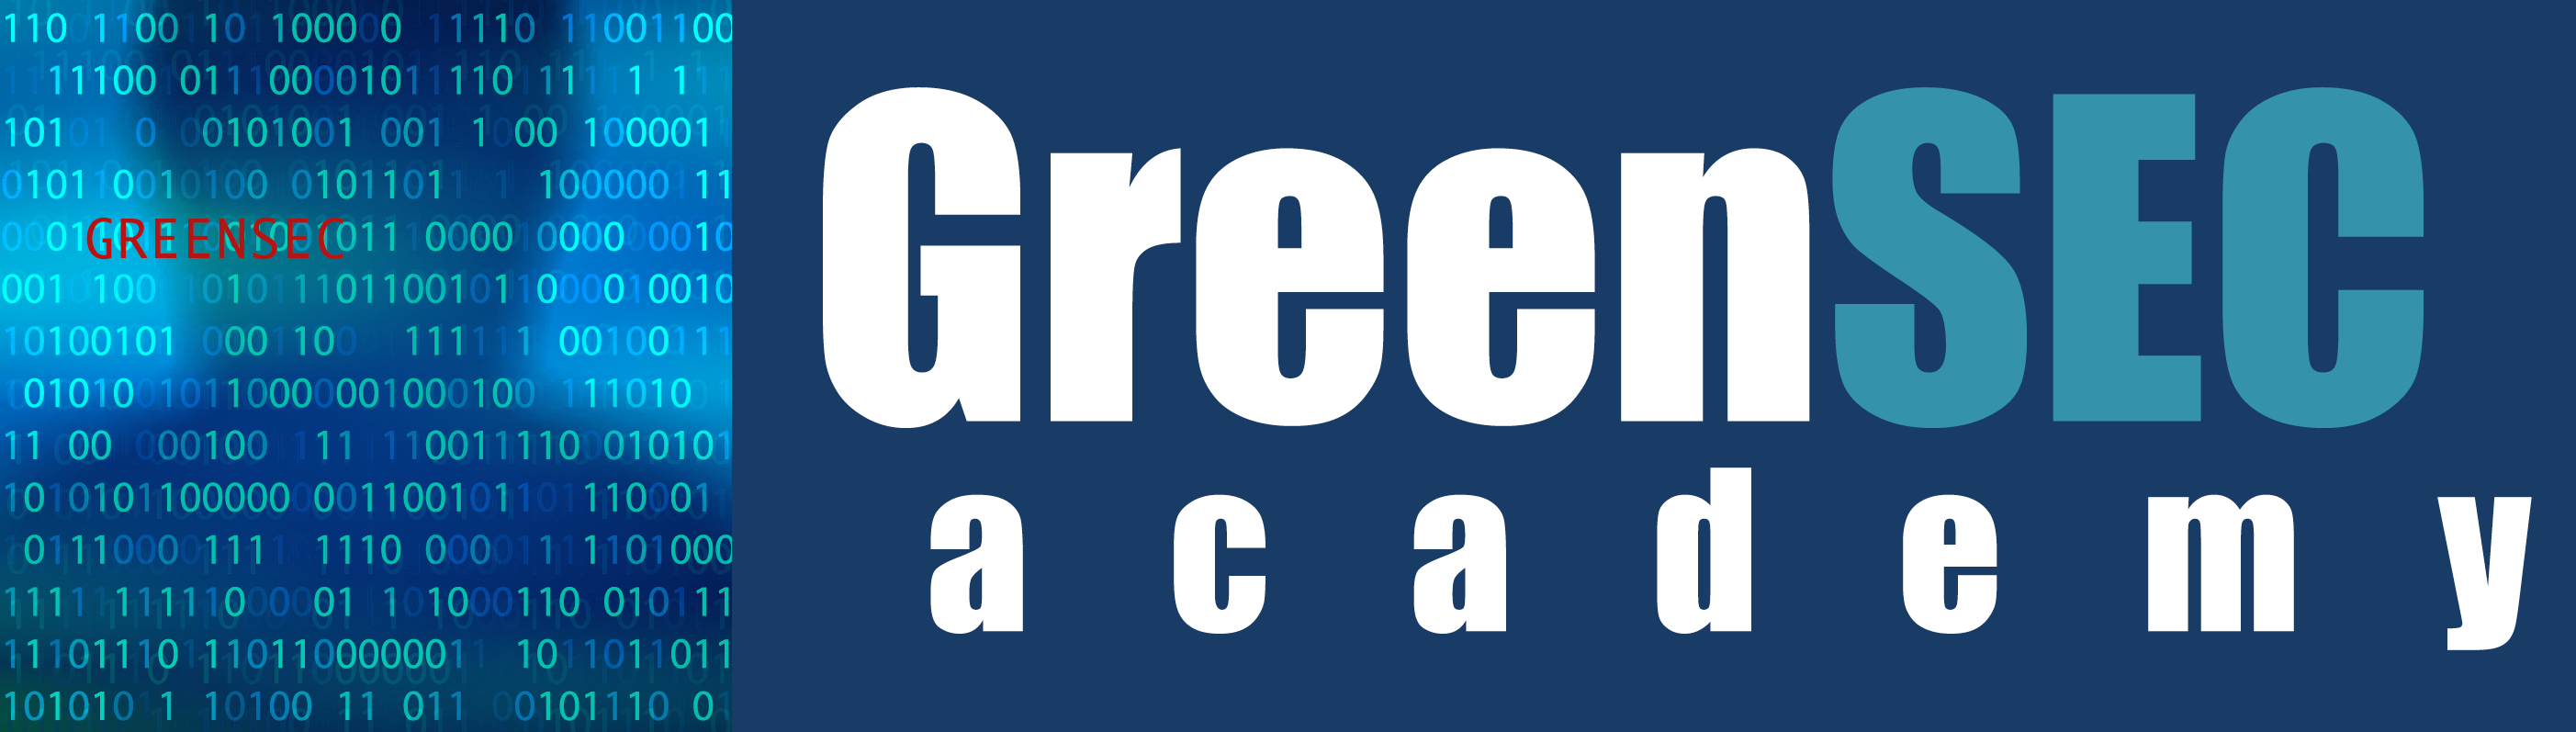 Final_greenSEC-academy-3